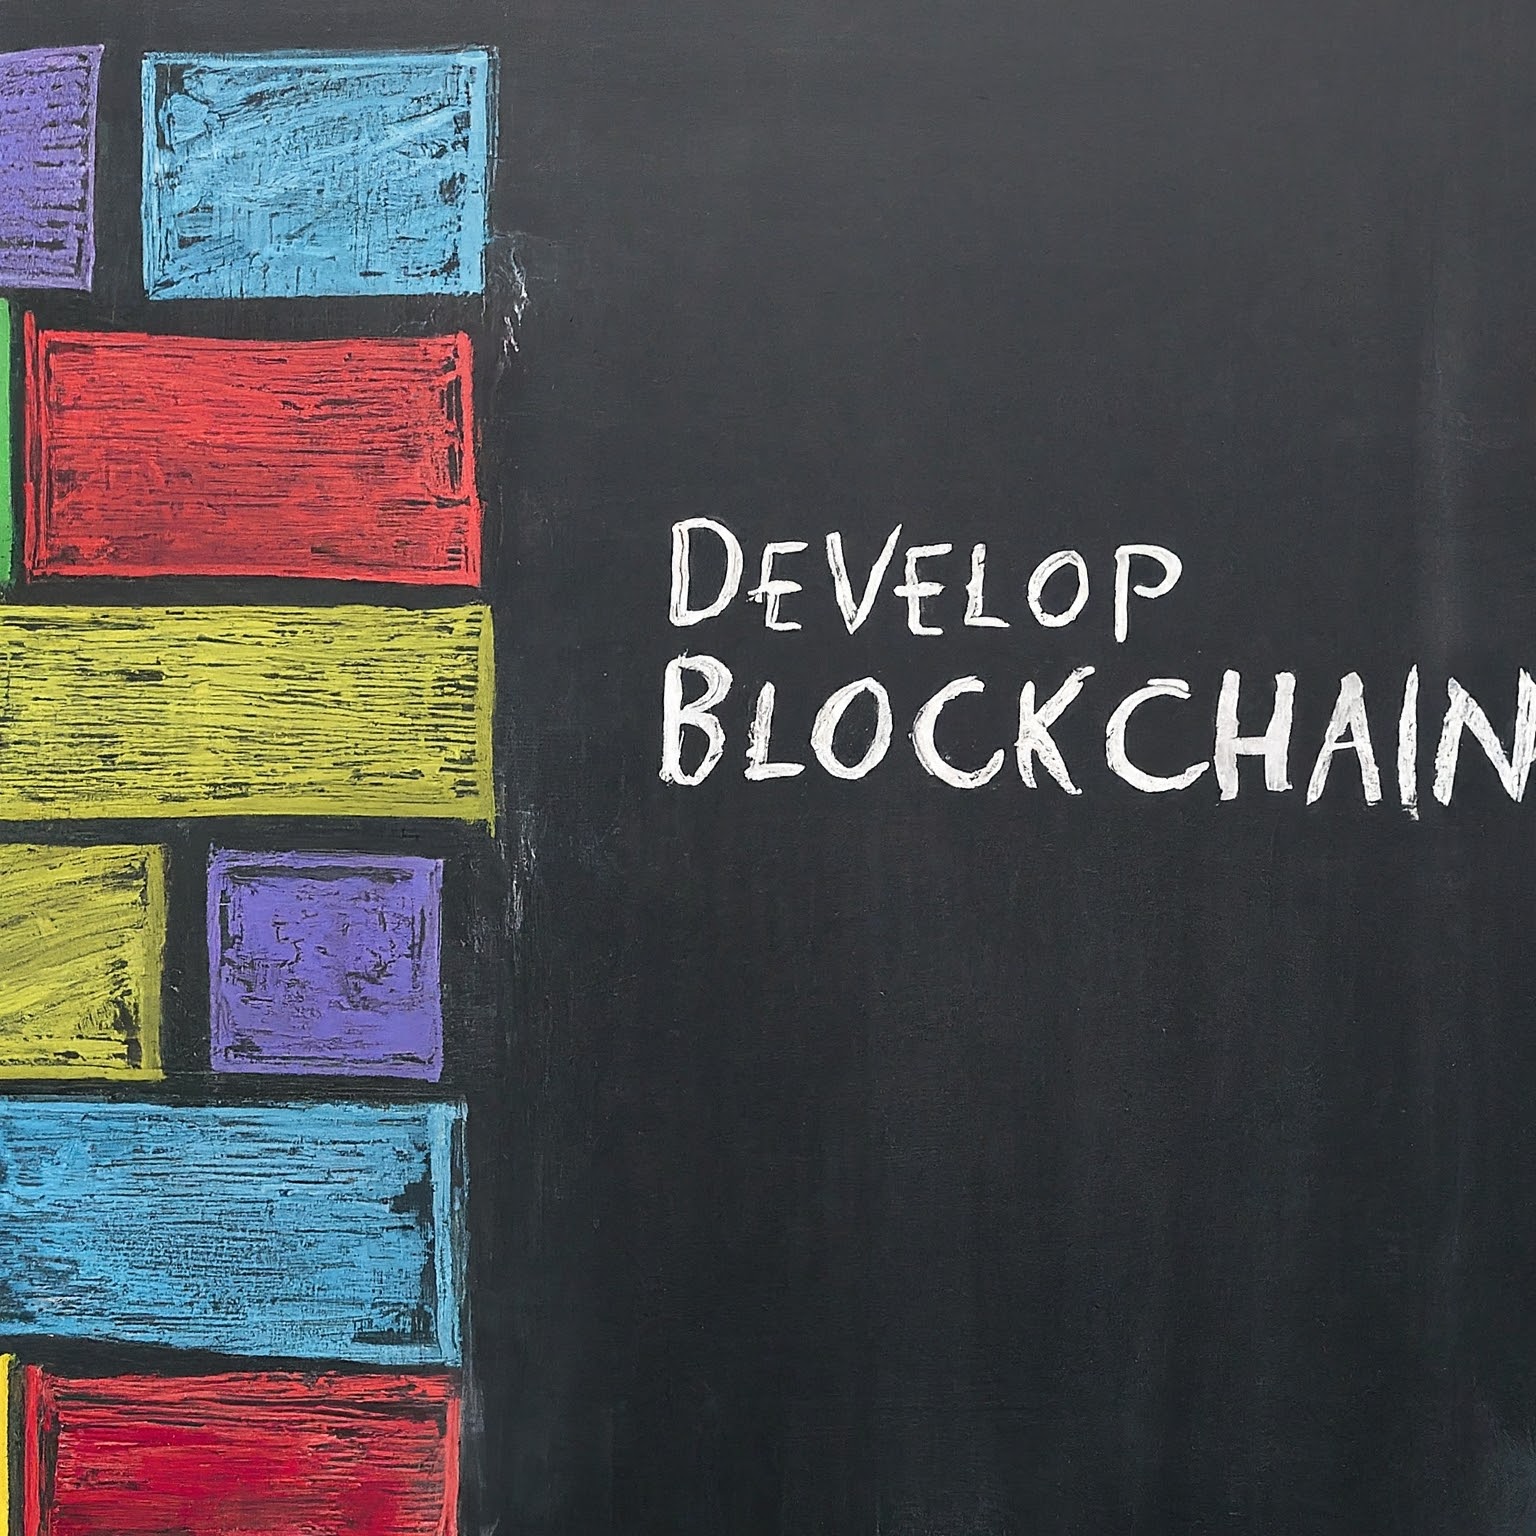 How to Develop Blockchain